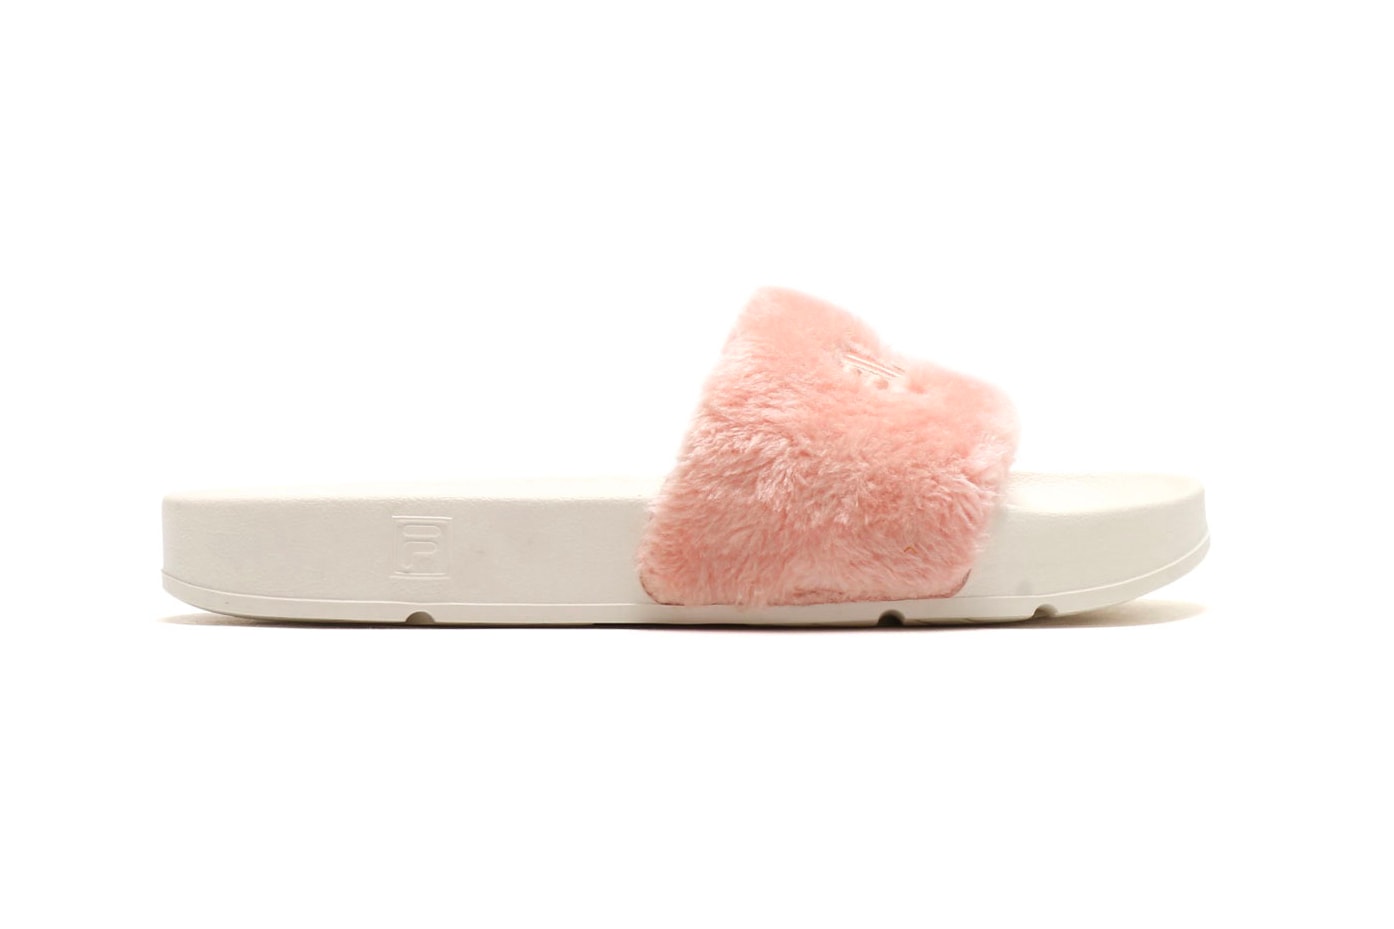 FILA Drifter Fur Slides Pink Pastel Millennial Light Shop Price Where to Buy Release atmos Sandals Slippers Japan Summer 2018